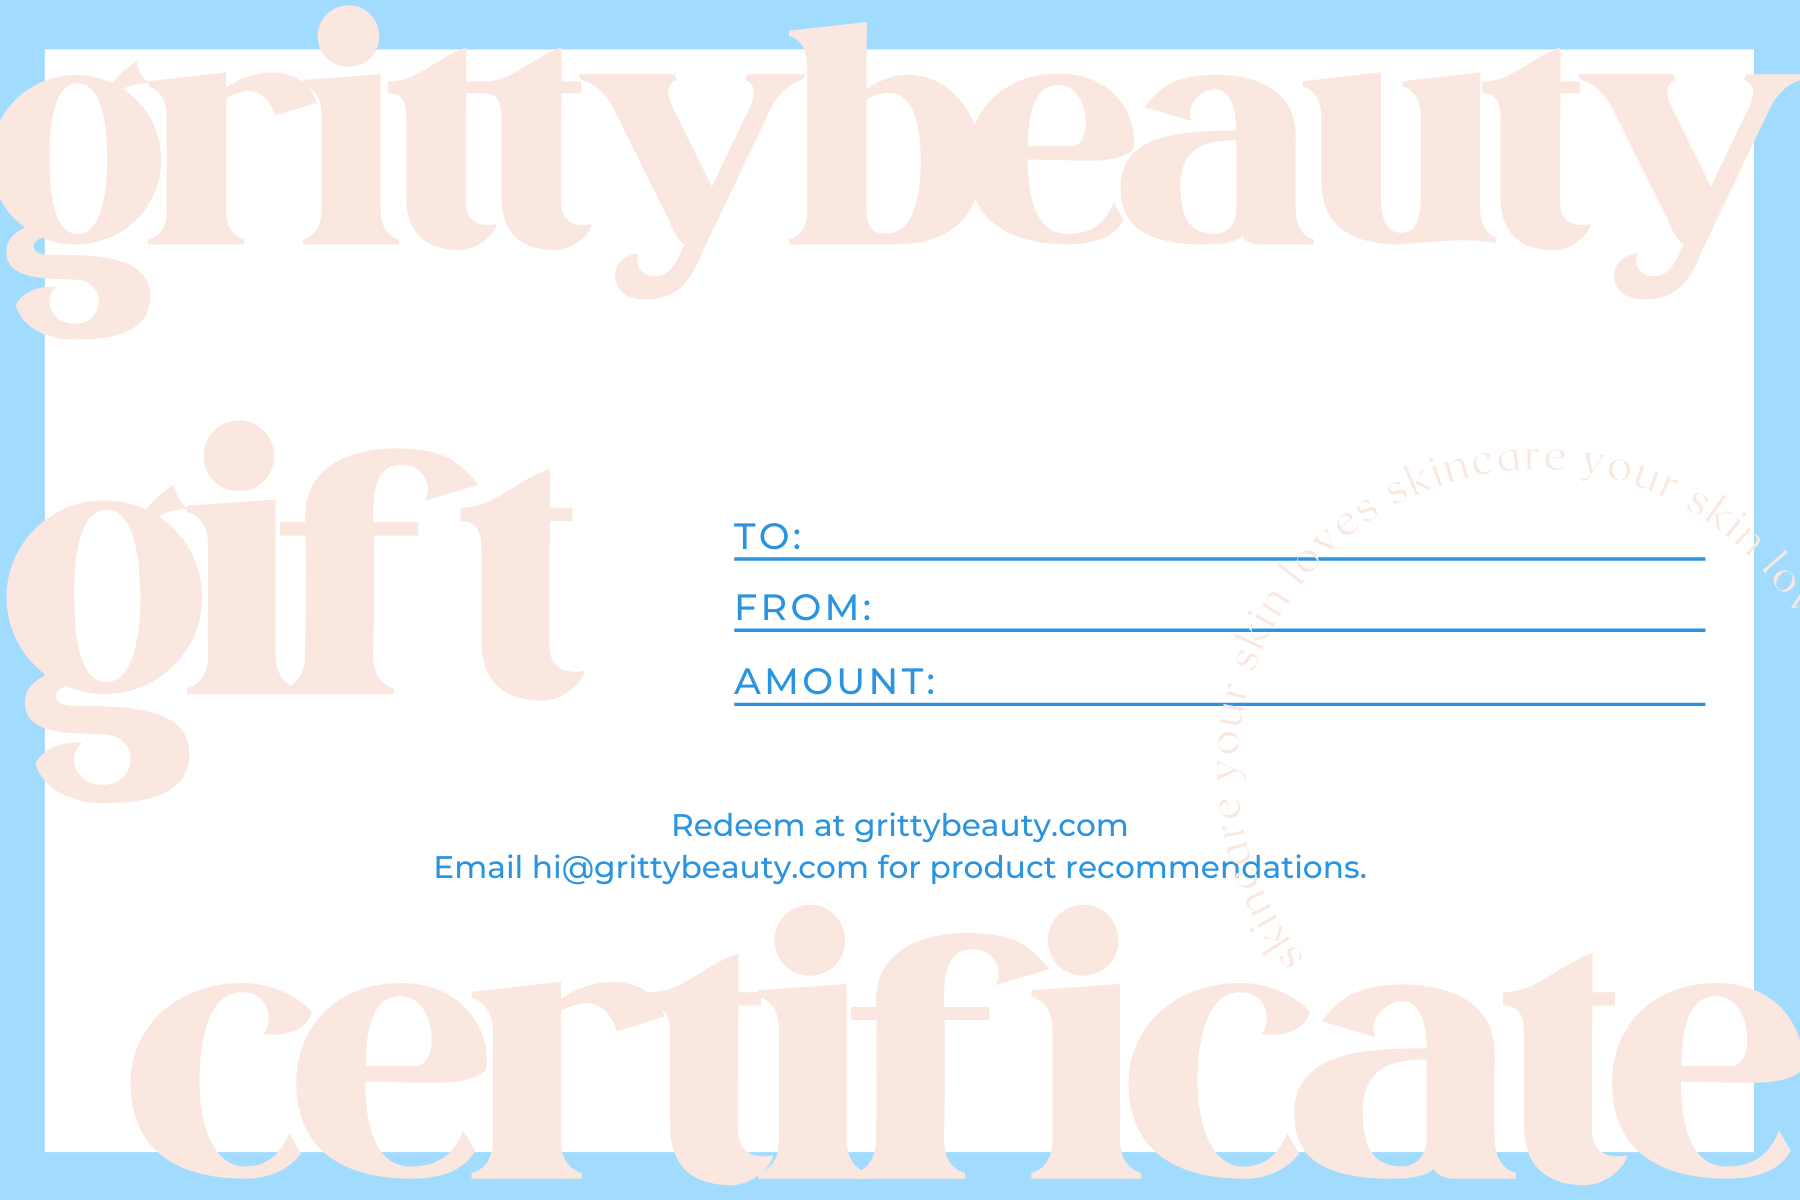 Digital Gift Certificate